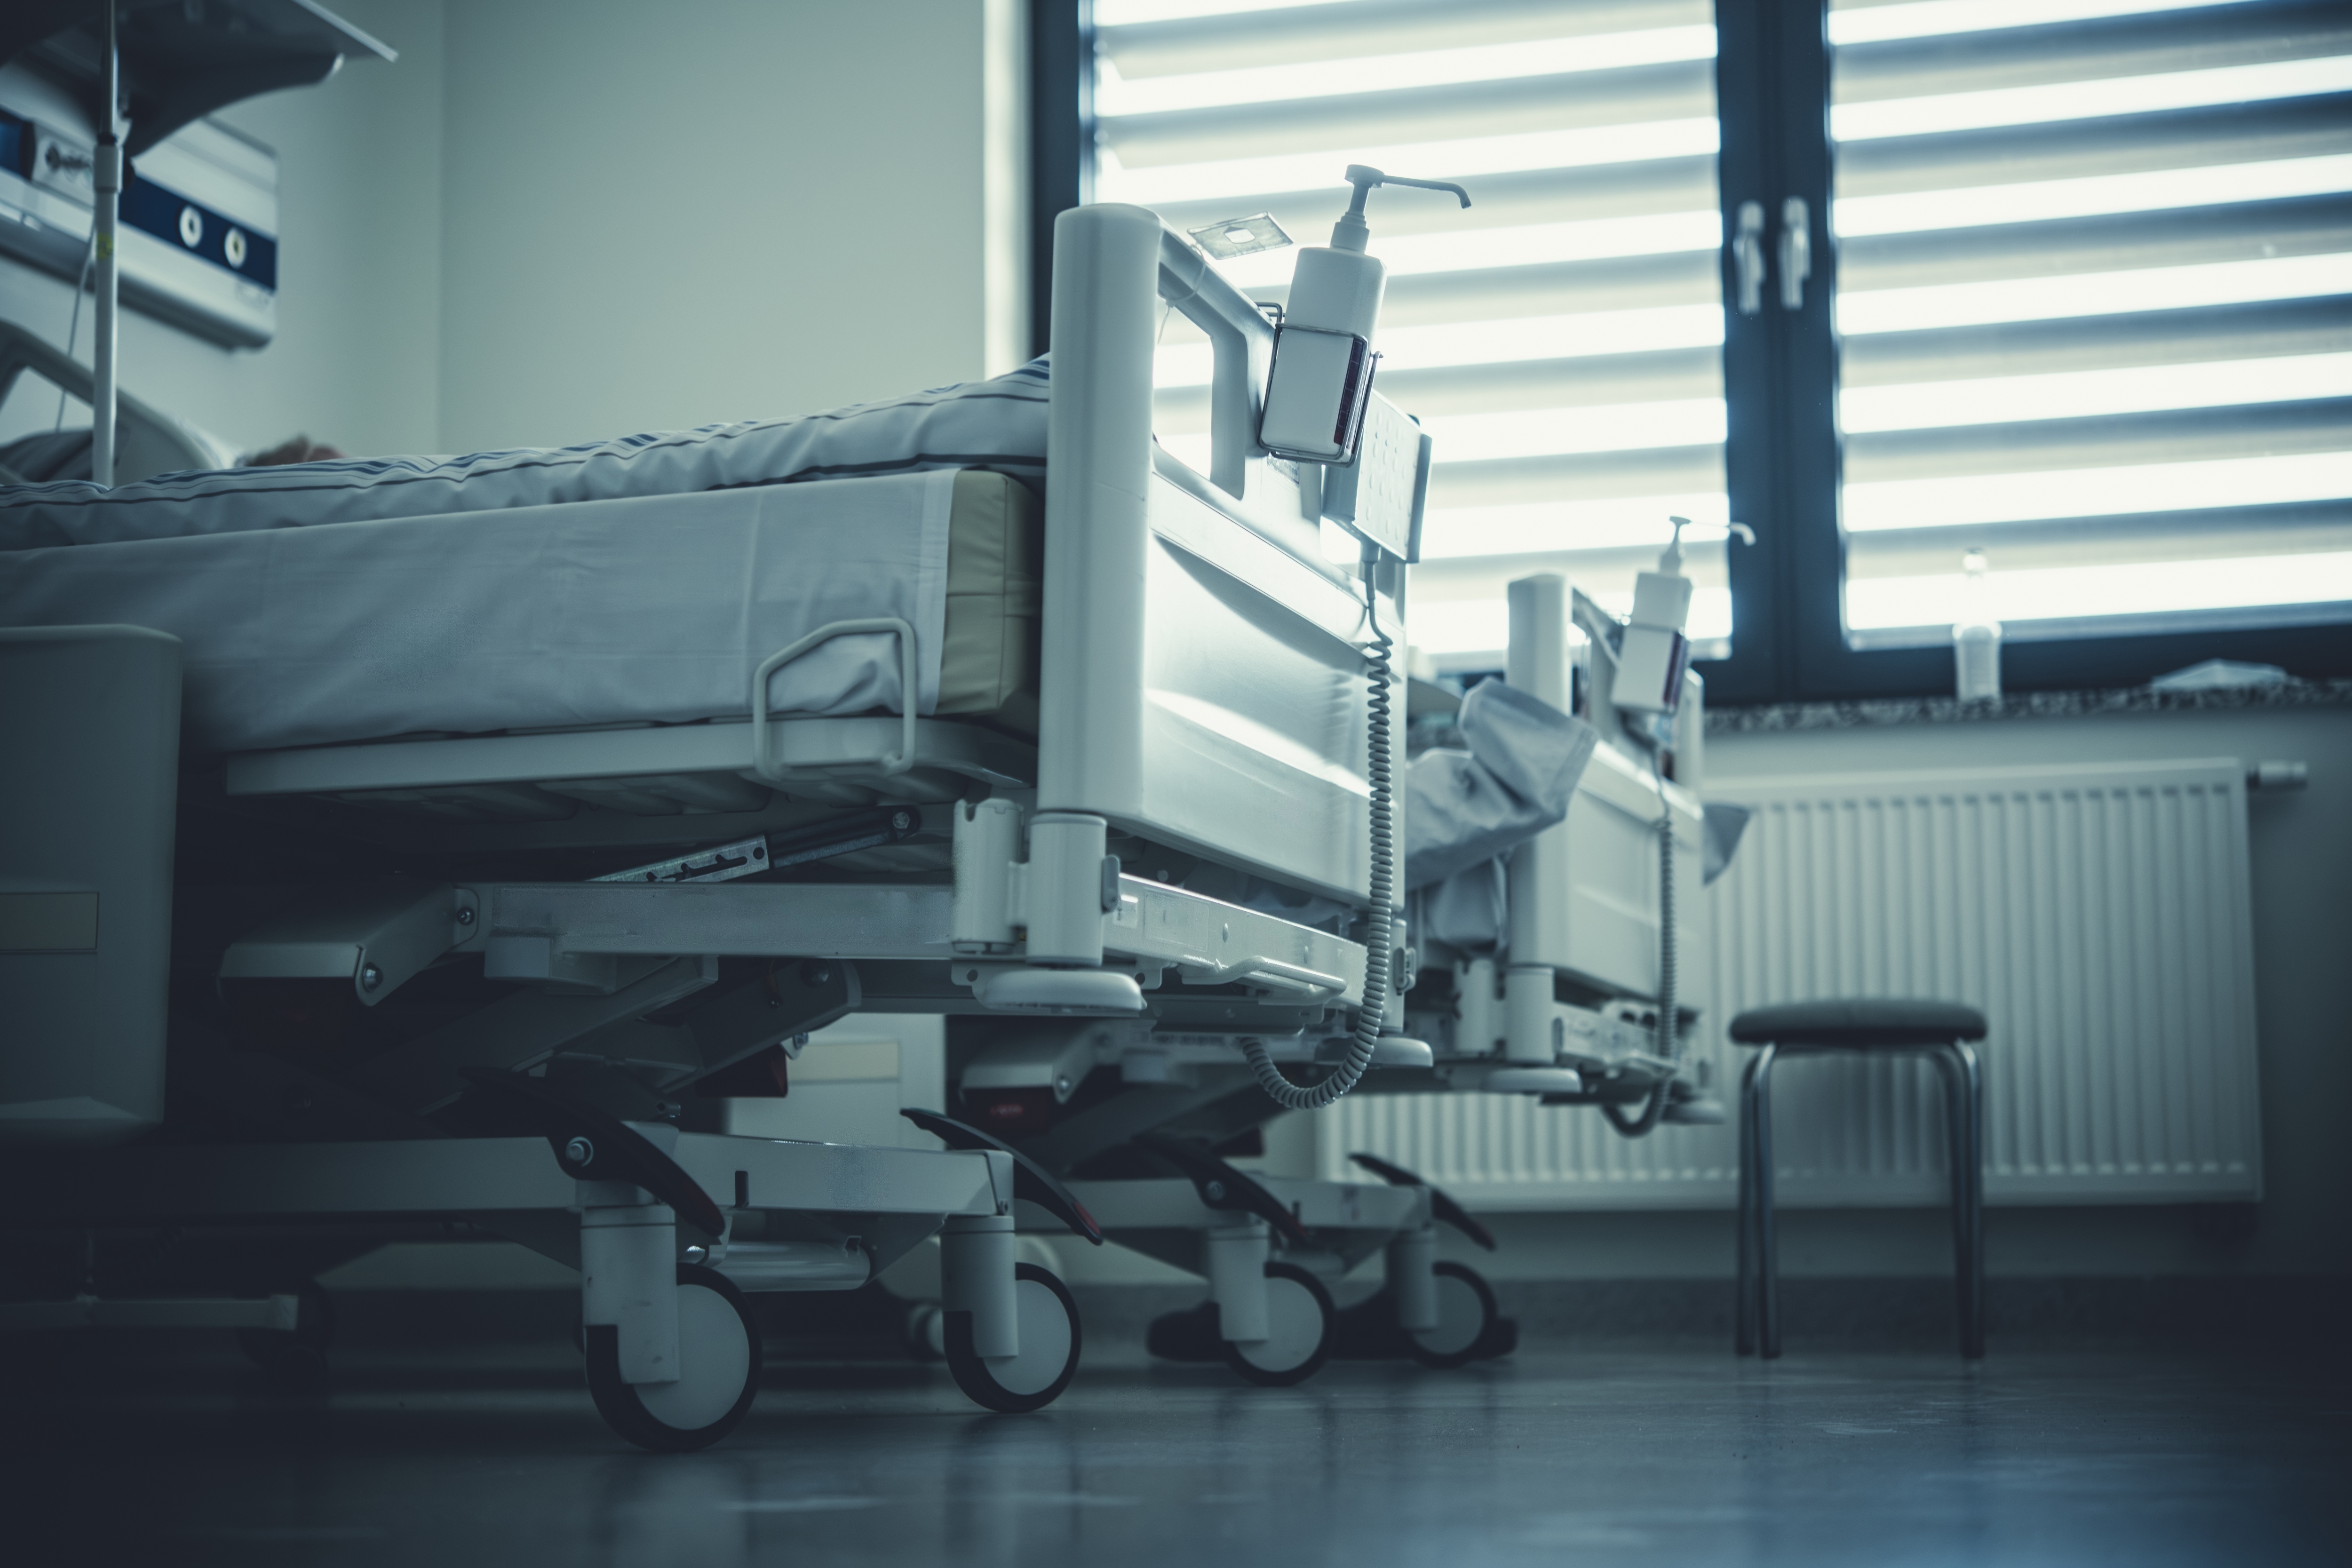 Beds in hospital room. | Source: Shutterstock